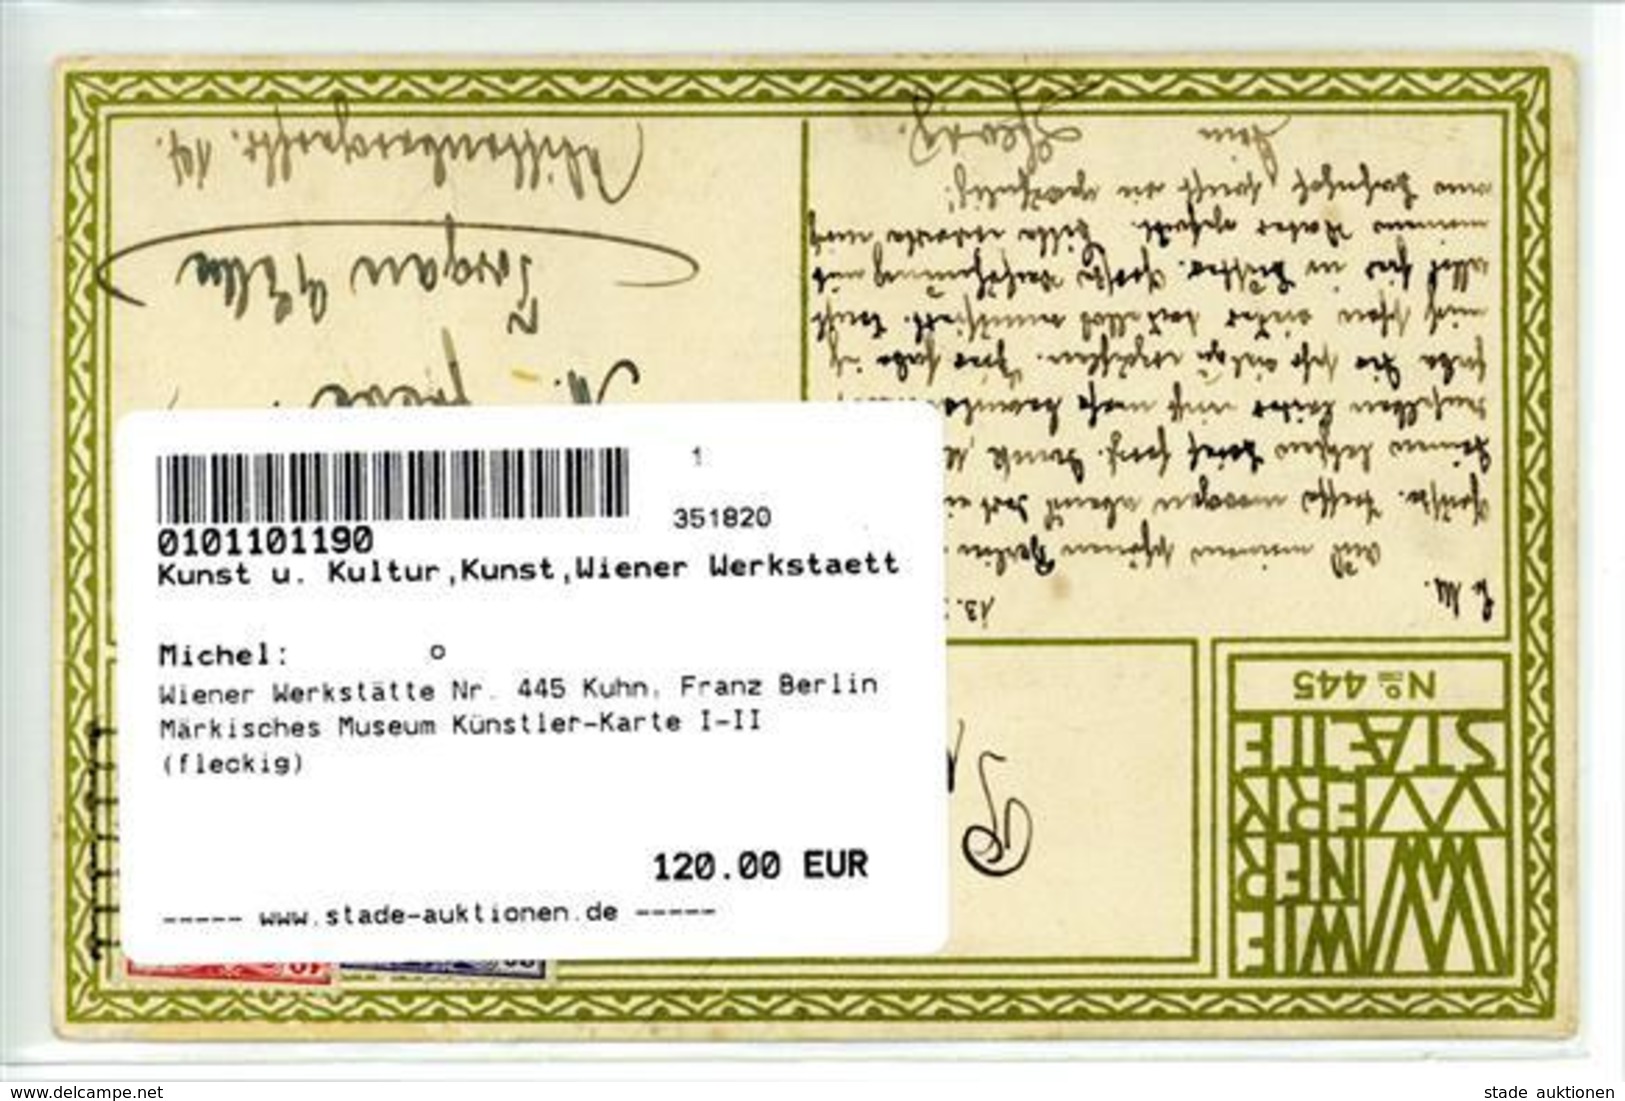 Wiener Werkstätte Nr. 445 Kuhn, Franz Berlin Märkisches Museum Künstler-Karte I-II (fleckig) - Kokoschka